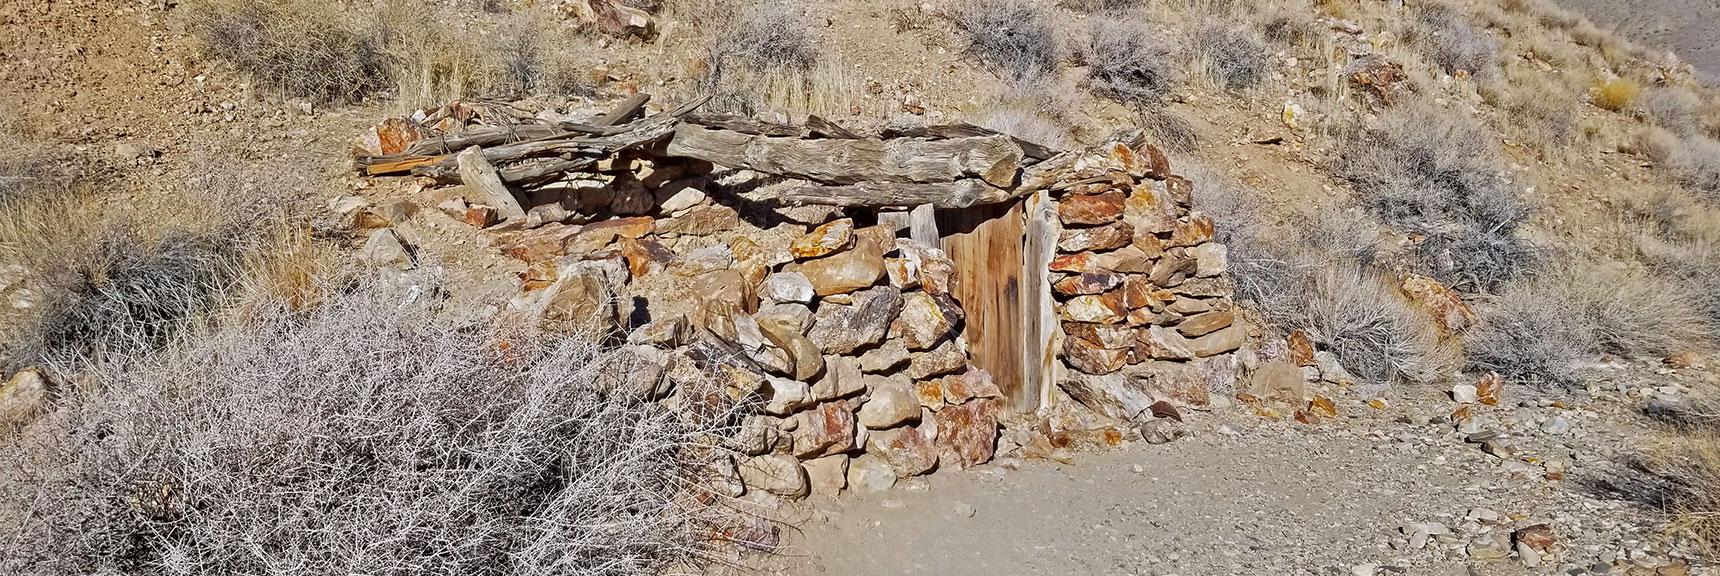 Storage Area Near Eureka Mine | Eureka Mine, Harrisburg, Cashier Mill, Death Valley, California